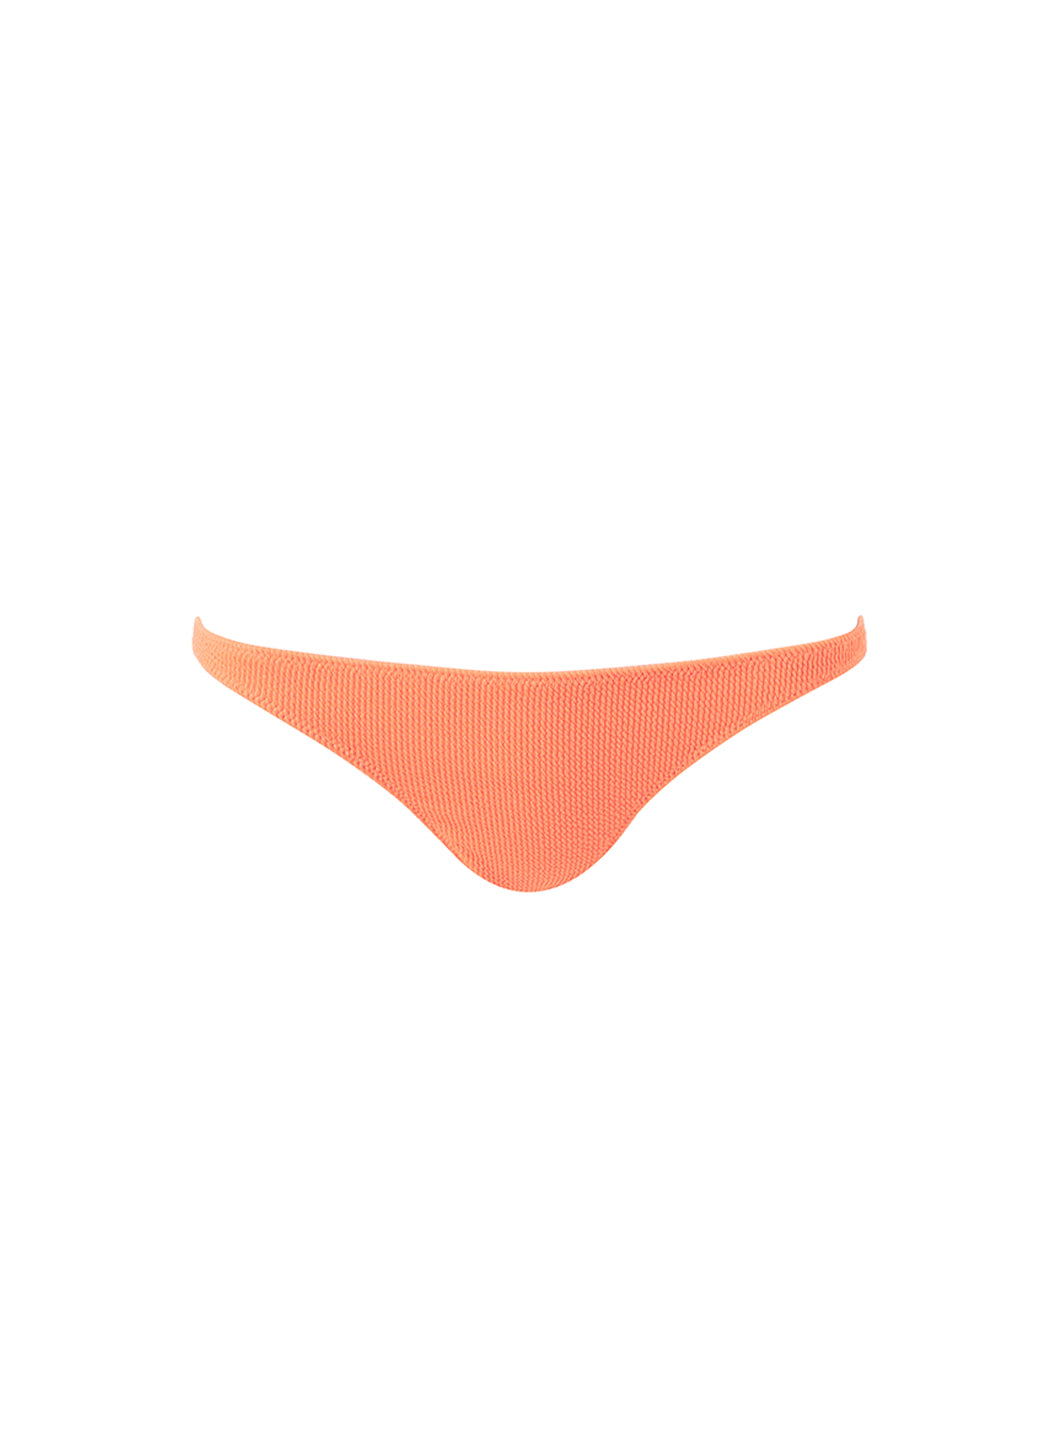 ponza orange ridges bikini bottom cutouts 2024